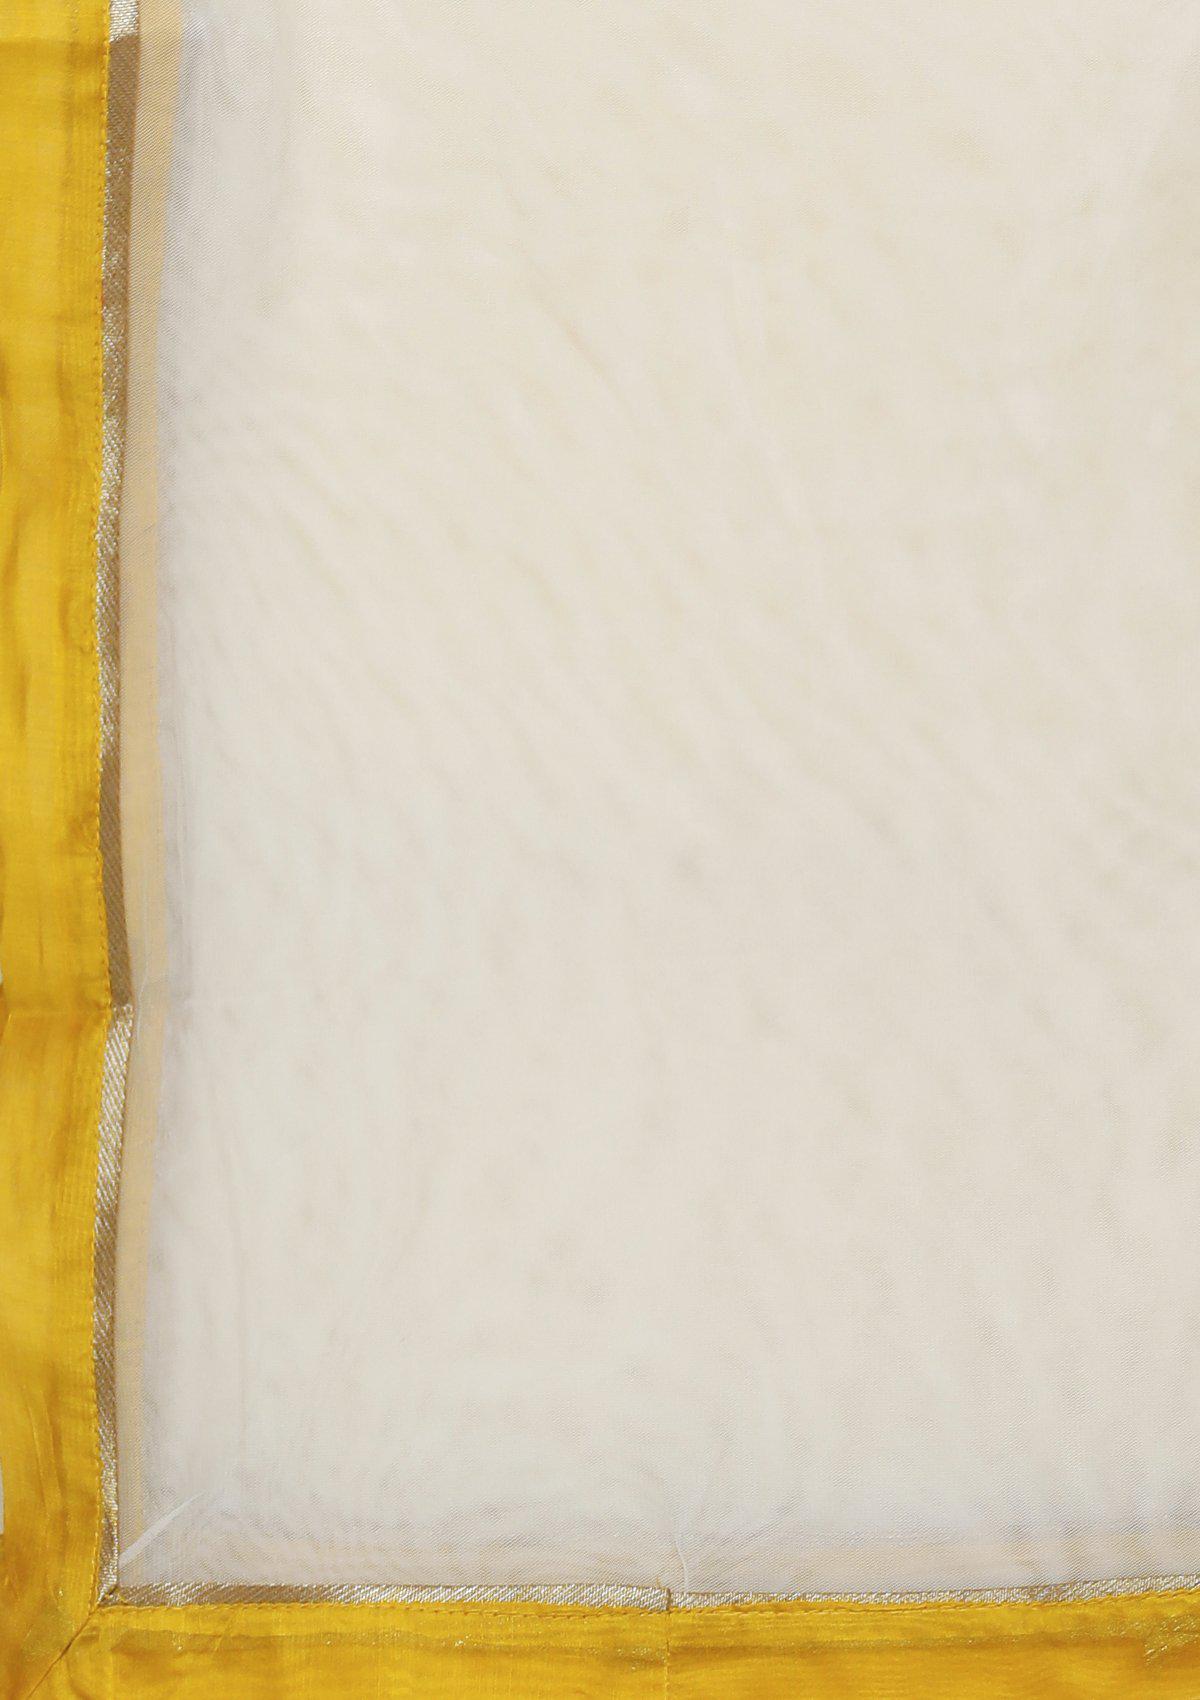 Cream and Yellow Thread Embroidered Silk Designer Gown-Koskii